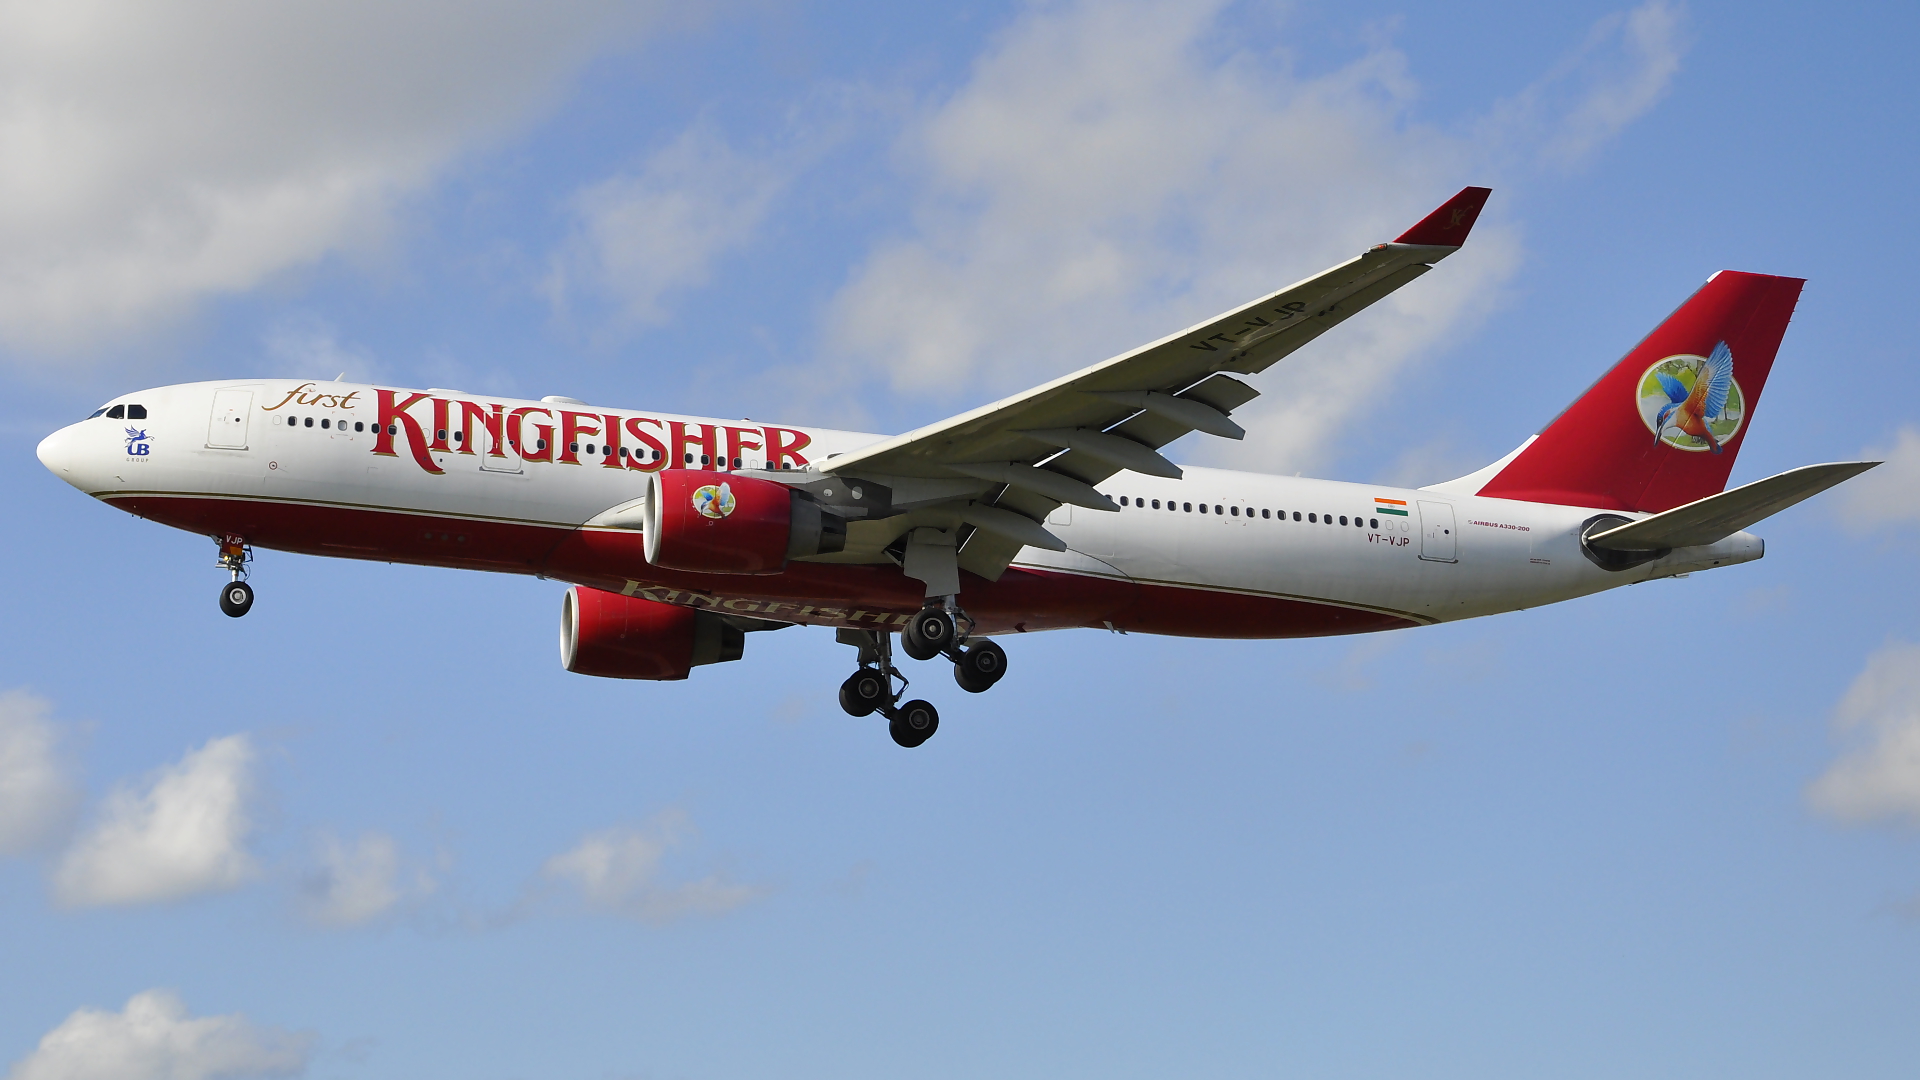 VT-VJP ✈ Kingfisher Airlines Airbus 330-223 @ London-Heathrow